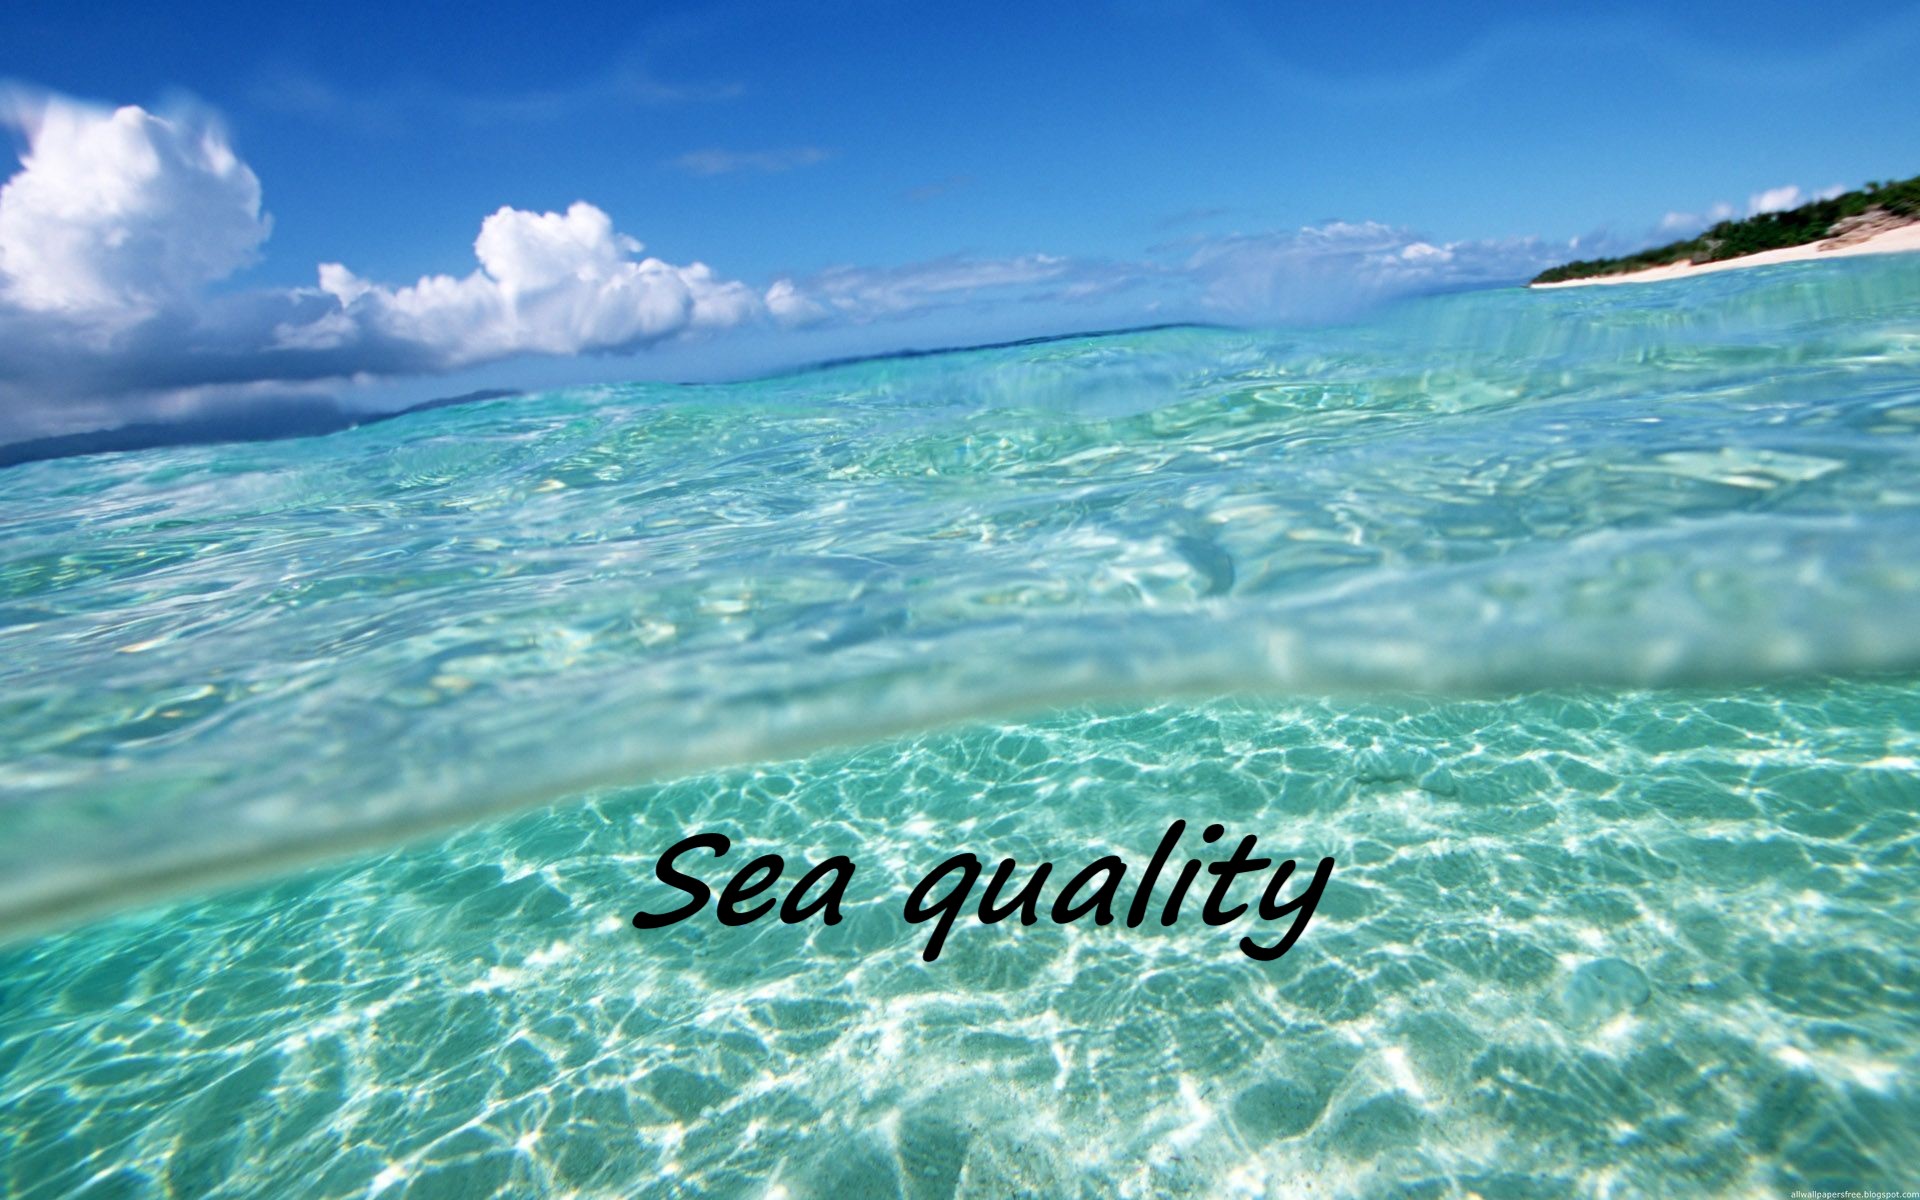 Sea quality